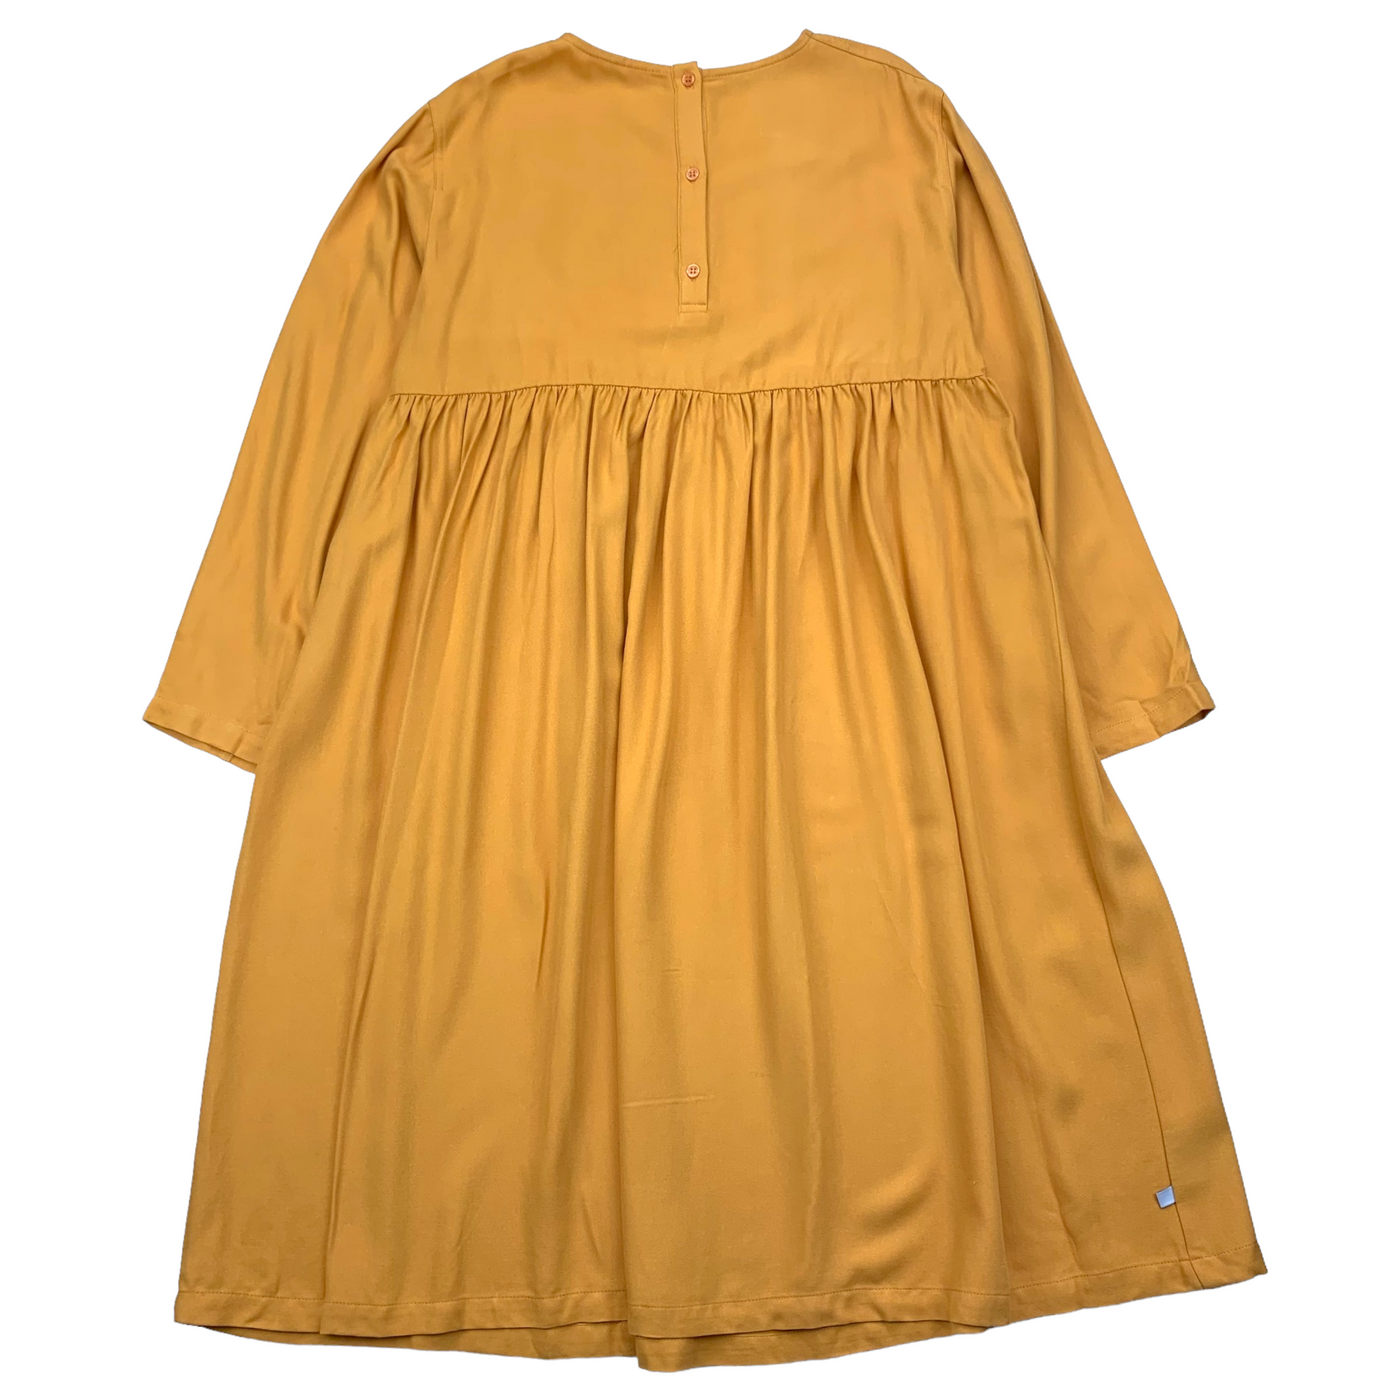 Repose AMS dress ochre yellow size 12